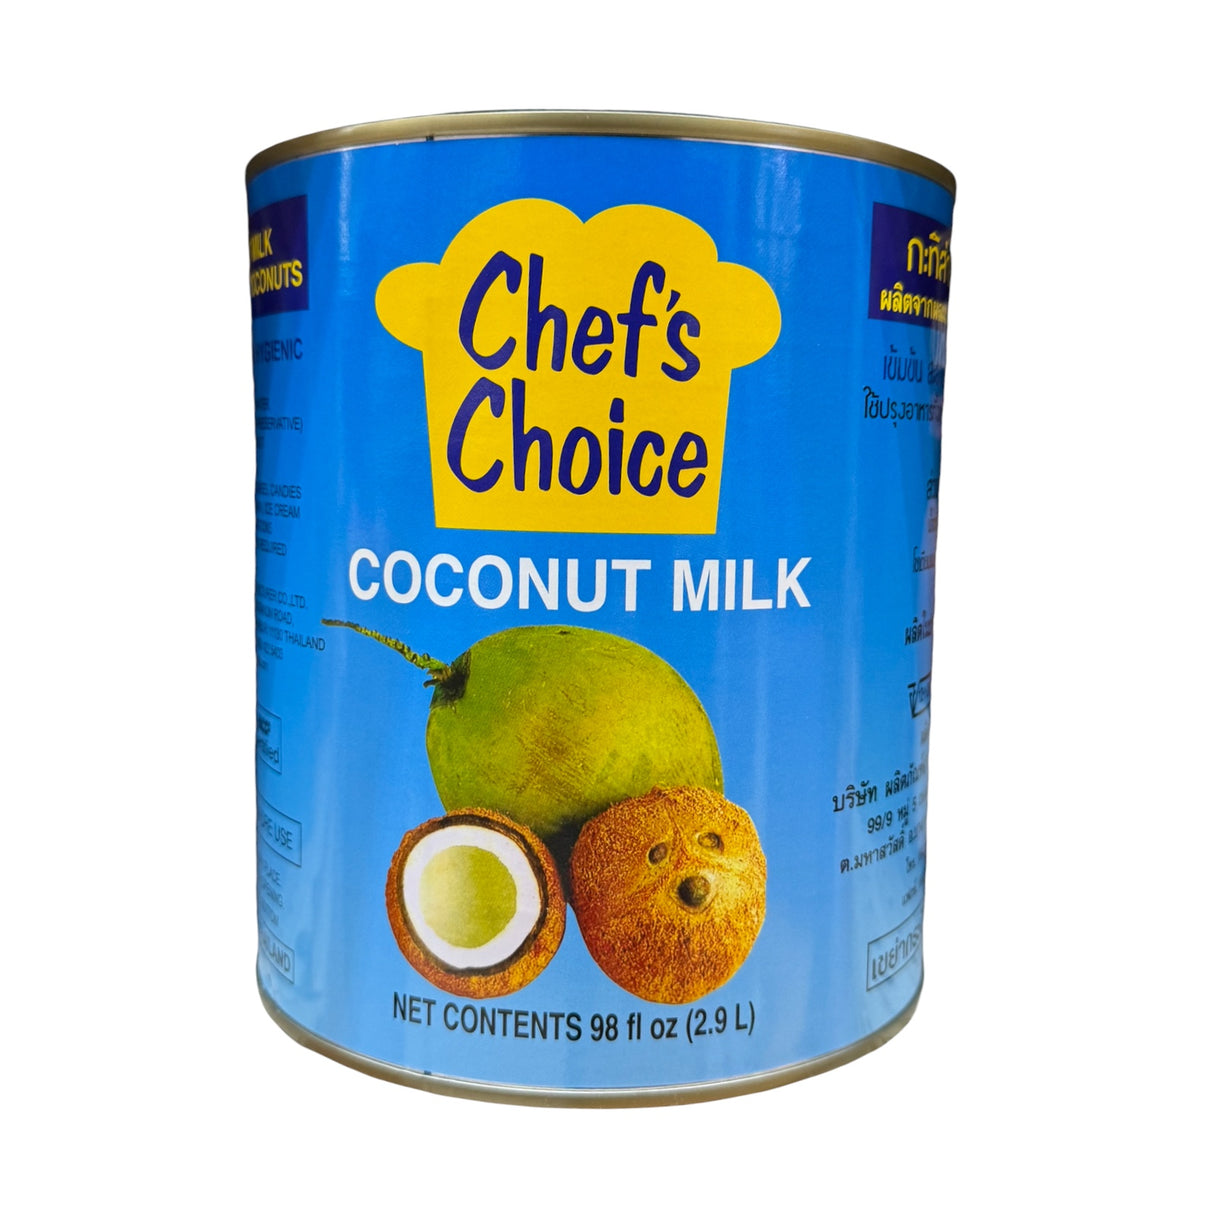 Chef's Choice Coconut Milk